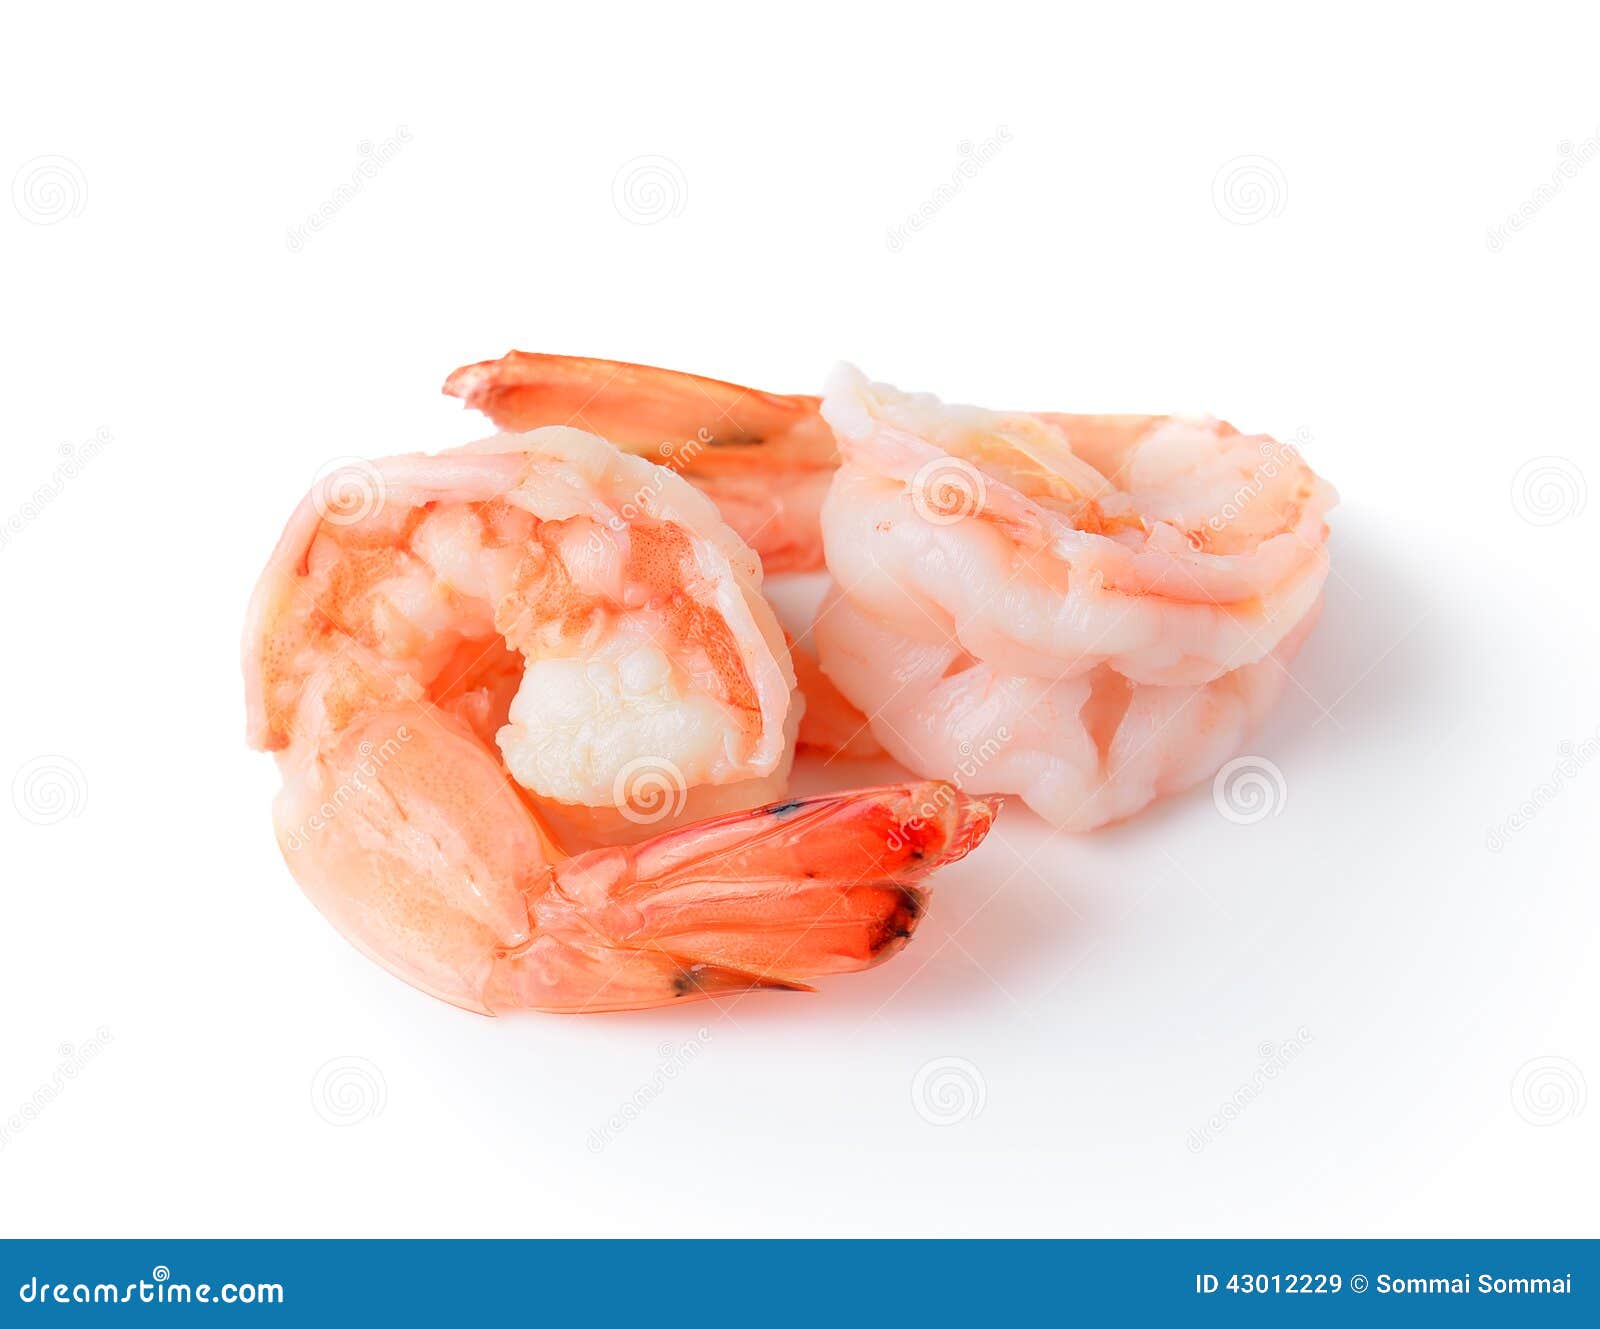 cooked shrimp  on white background.